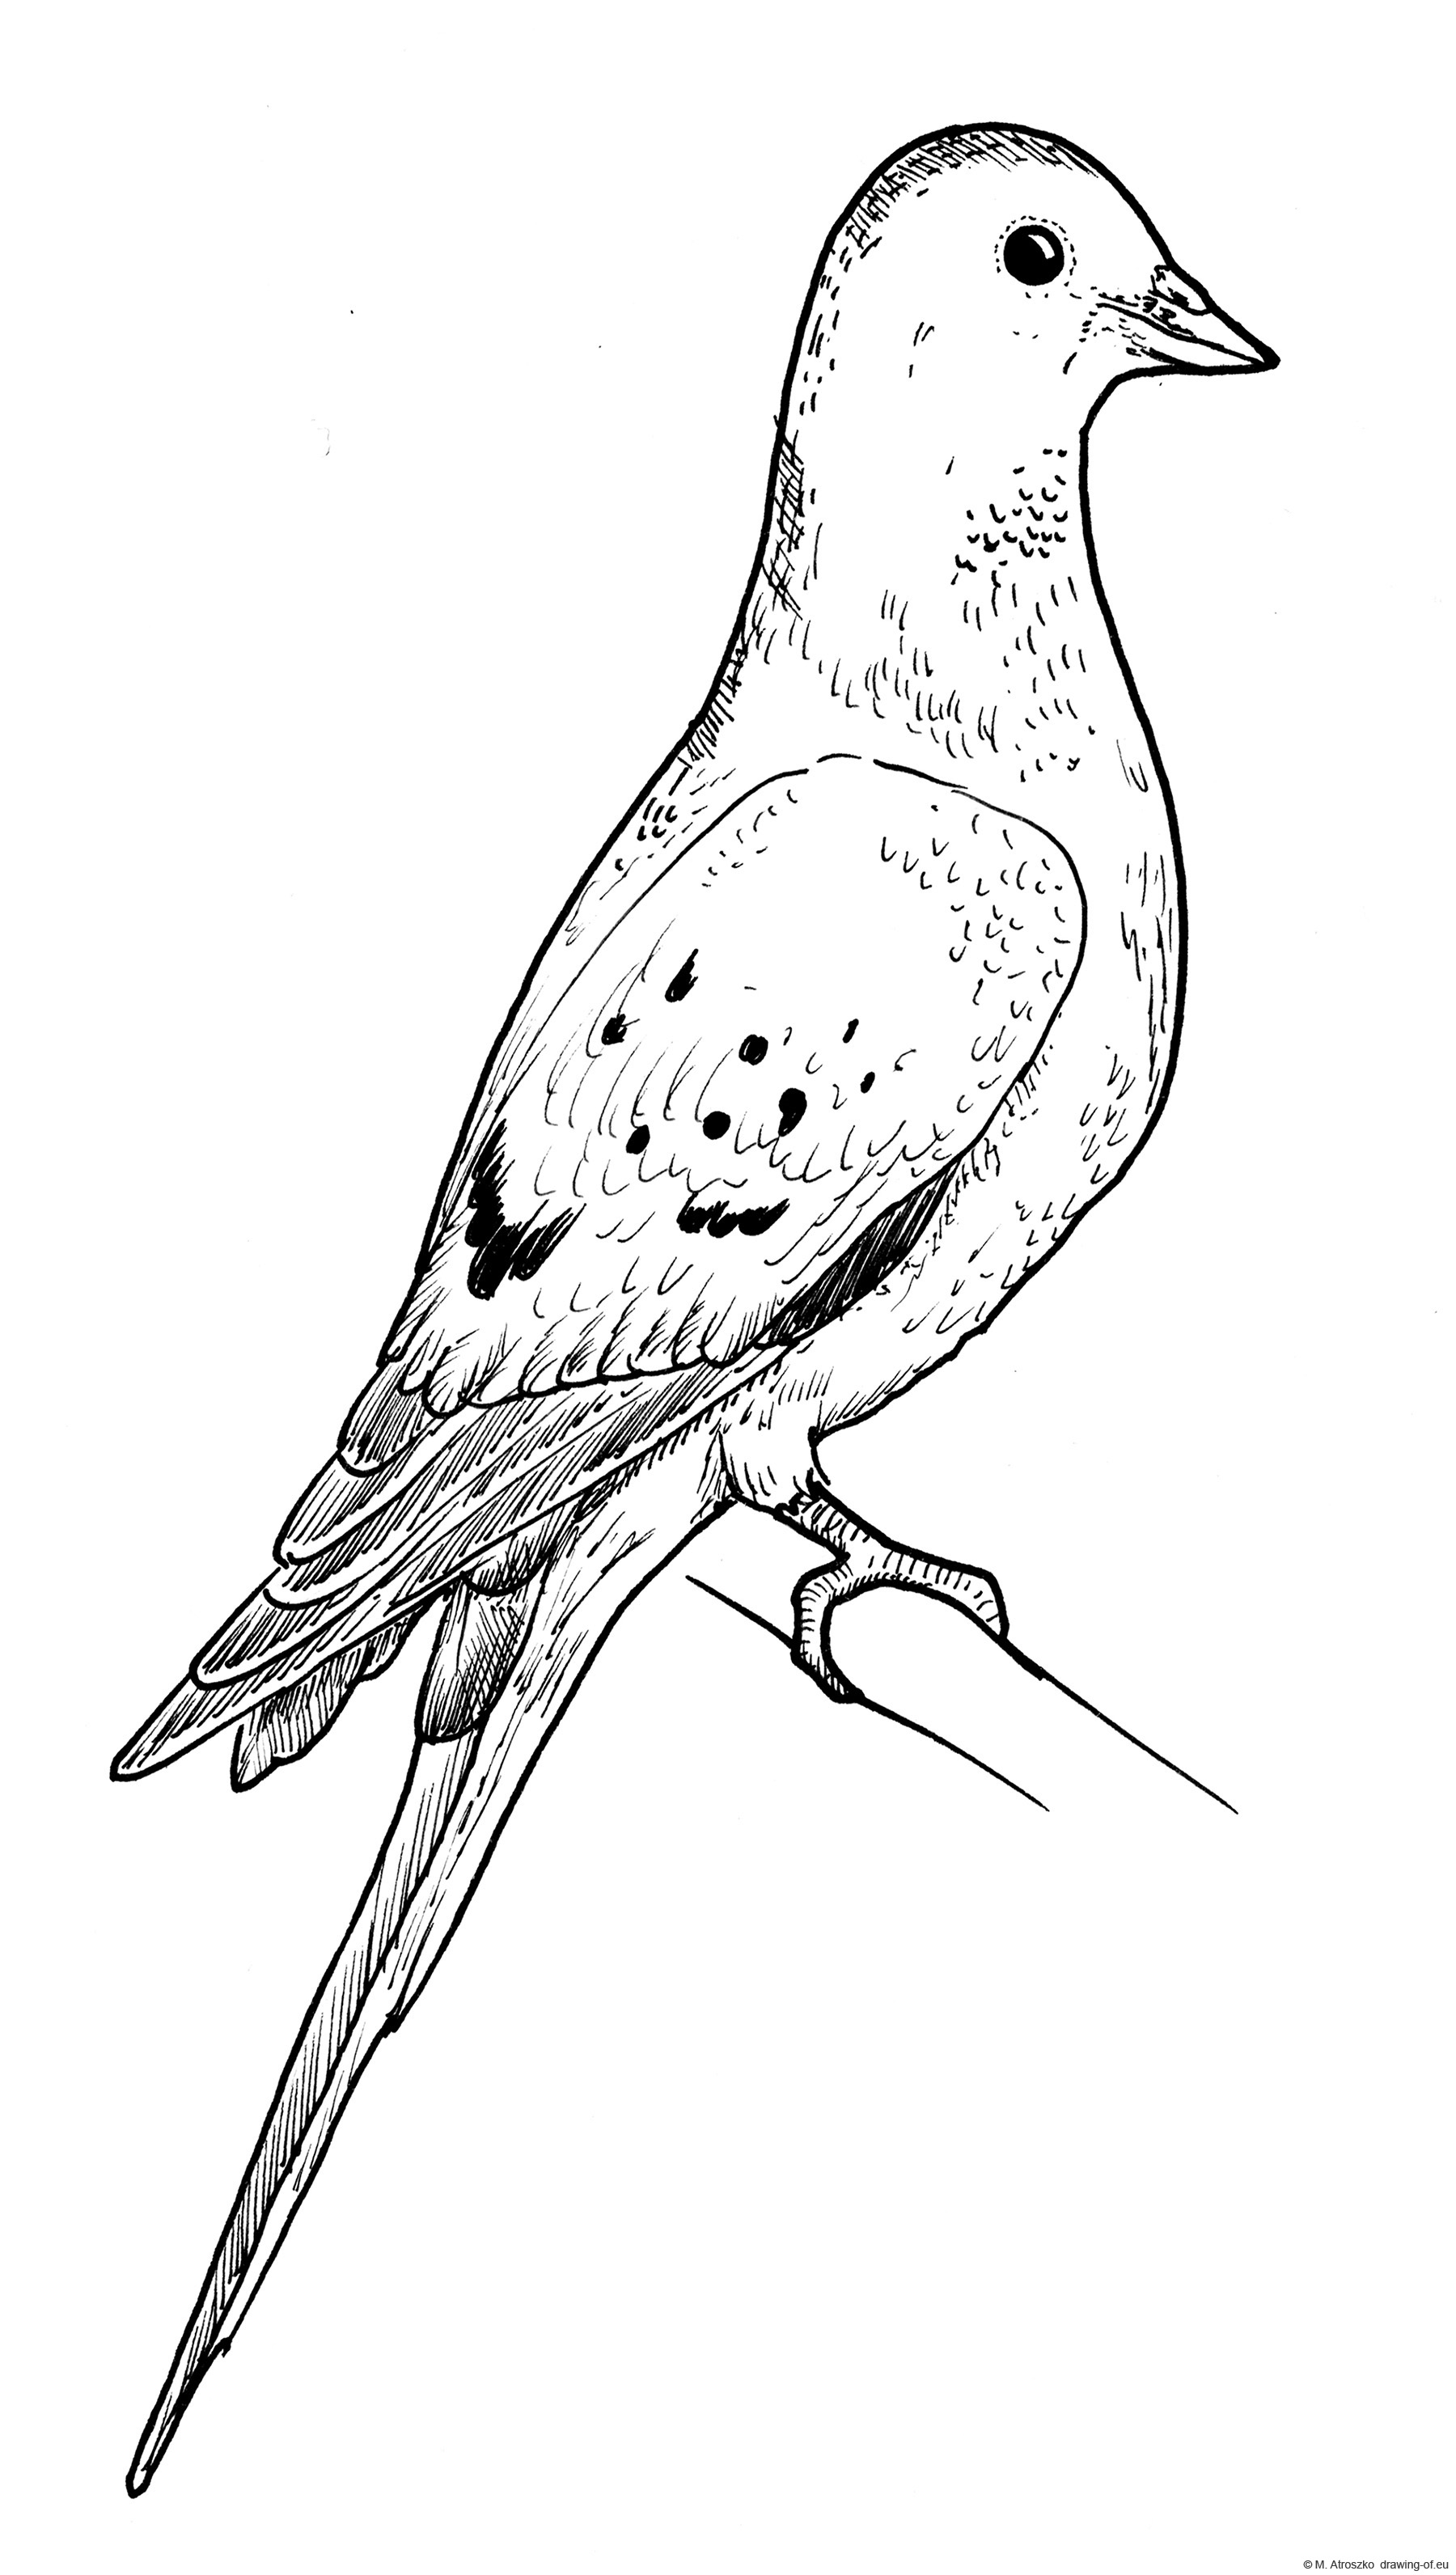 Passenger pigeon drawing. Extinct animals pictures.